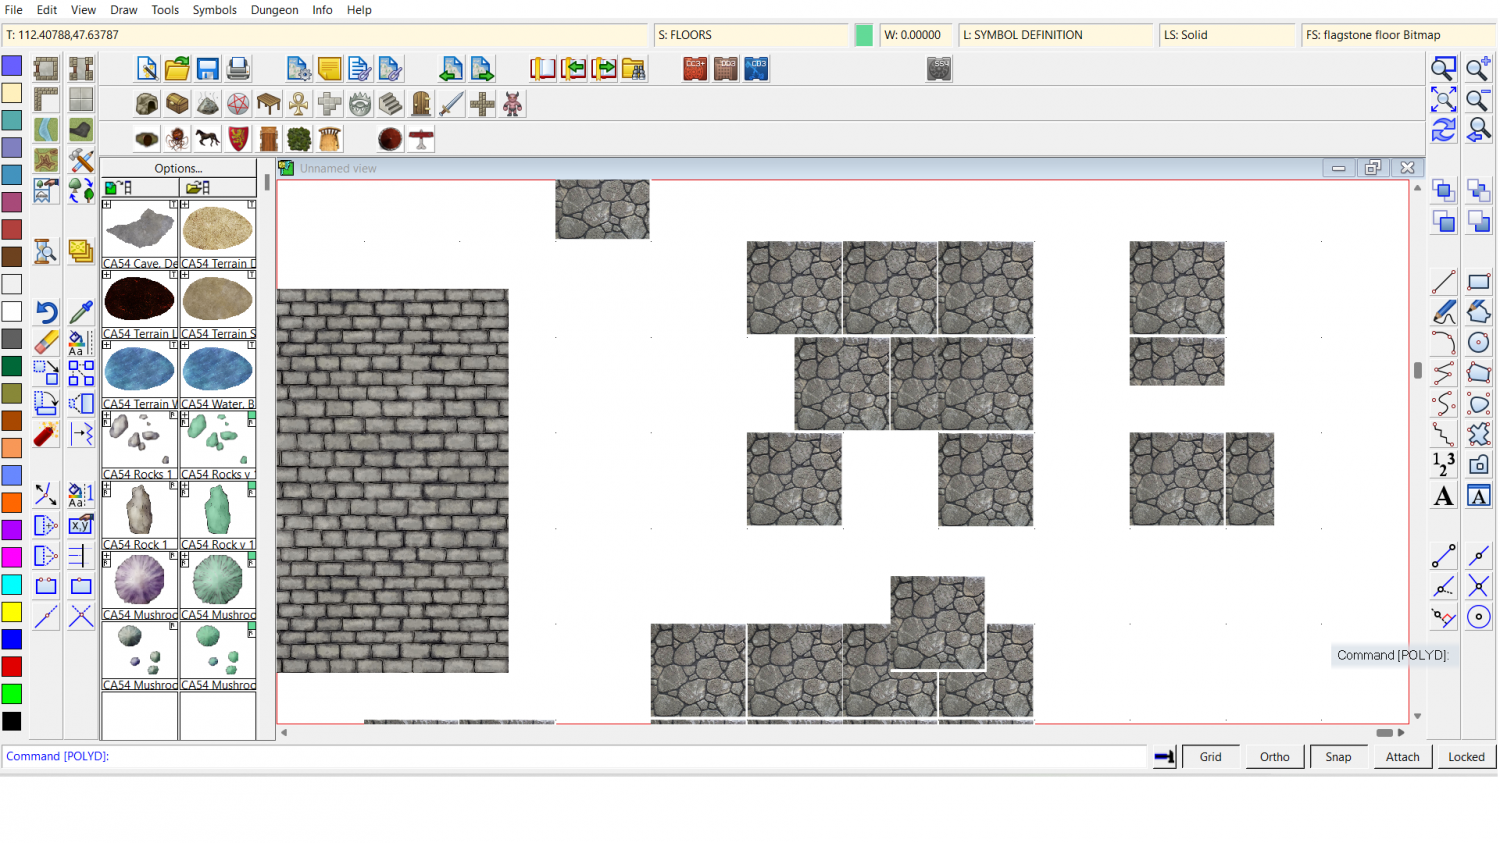 flagstone floor bitmap test.png